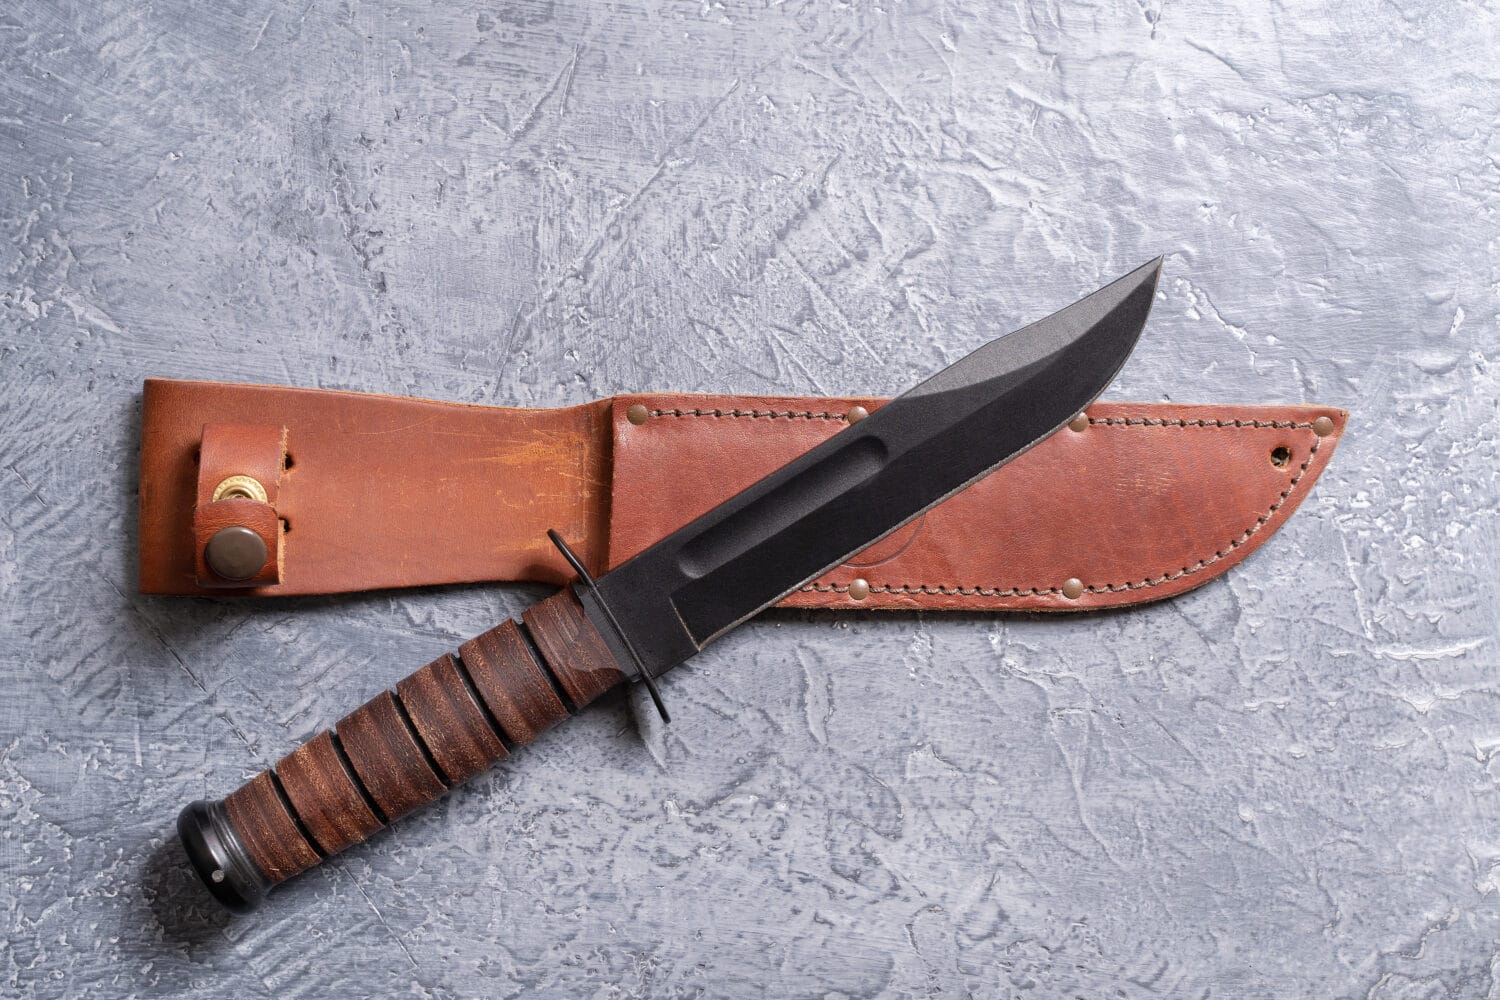 military combat knife ka-bar, the knife of the marine corps and the U.S. Navy